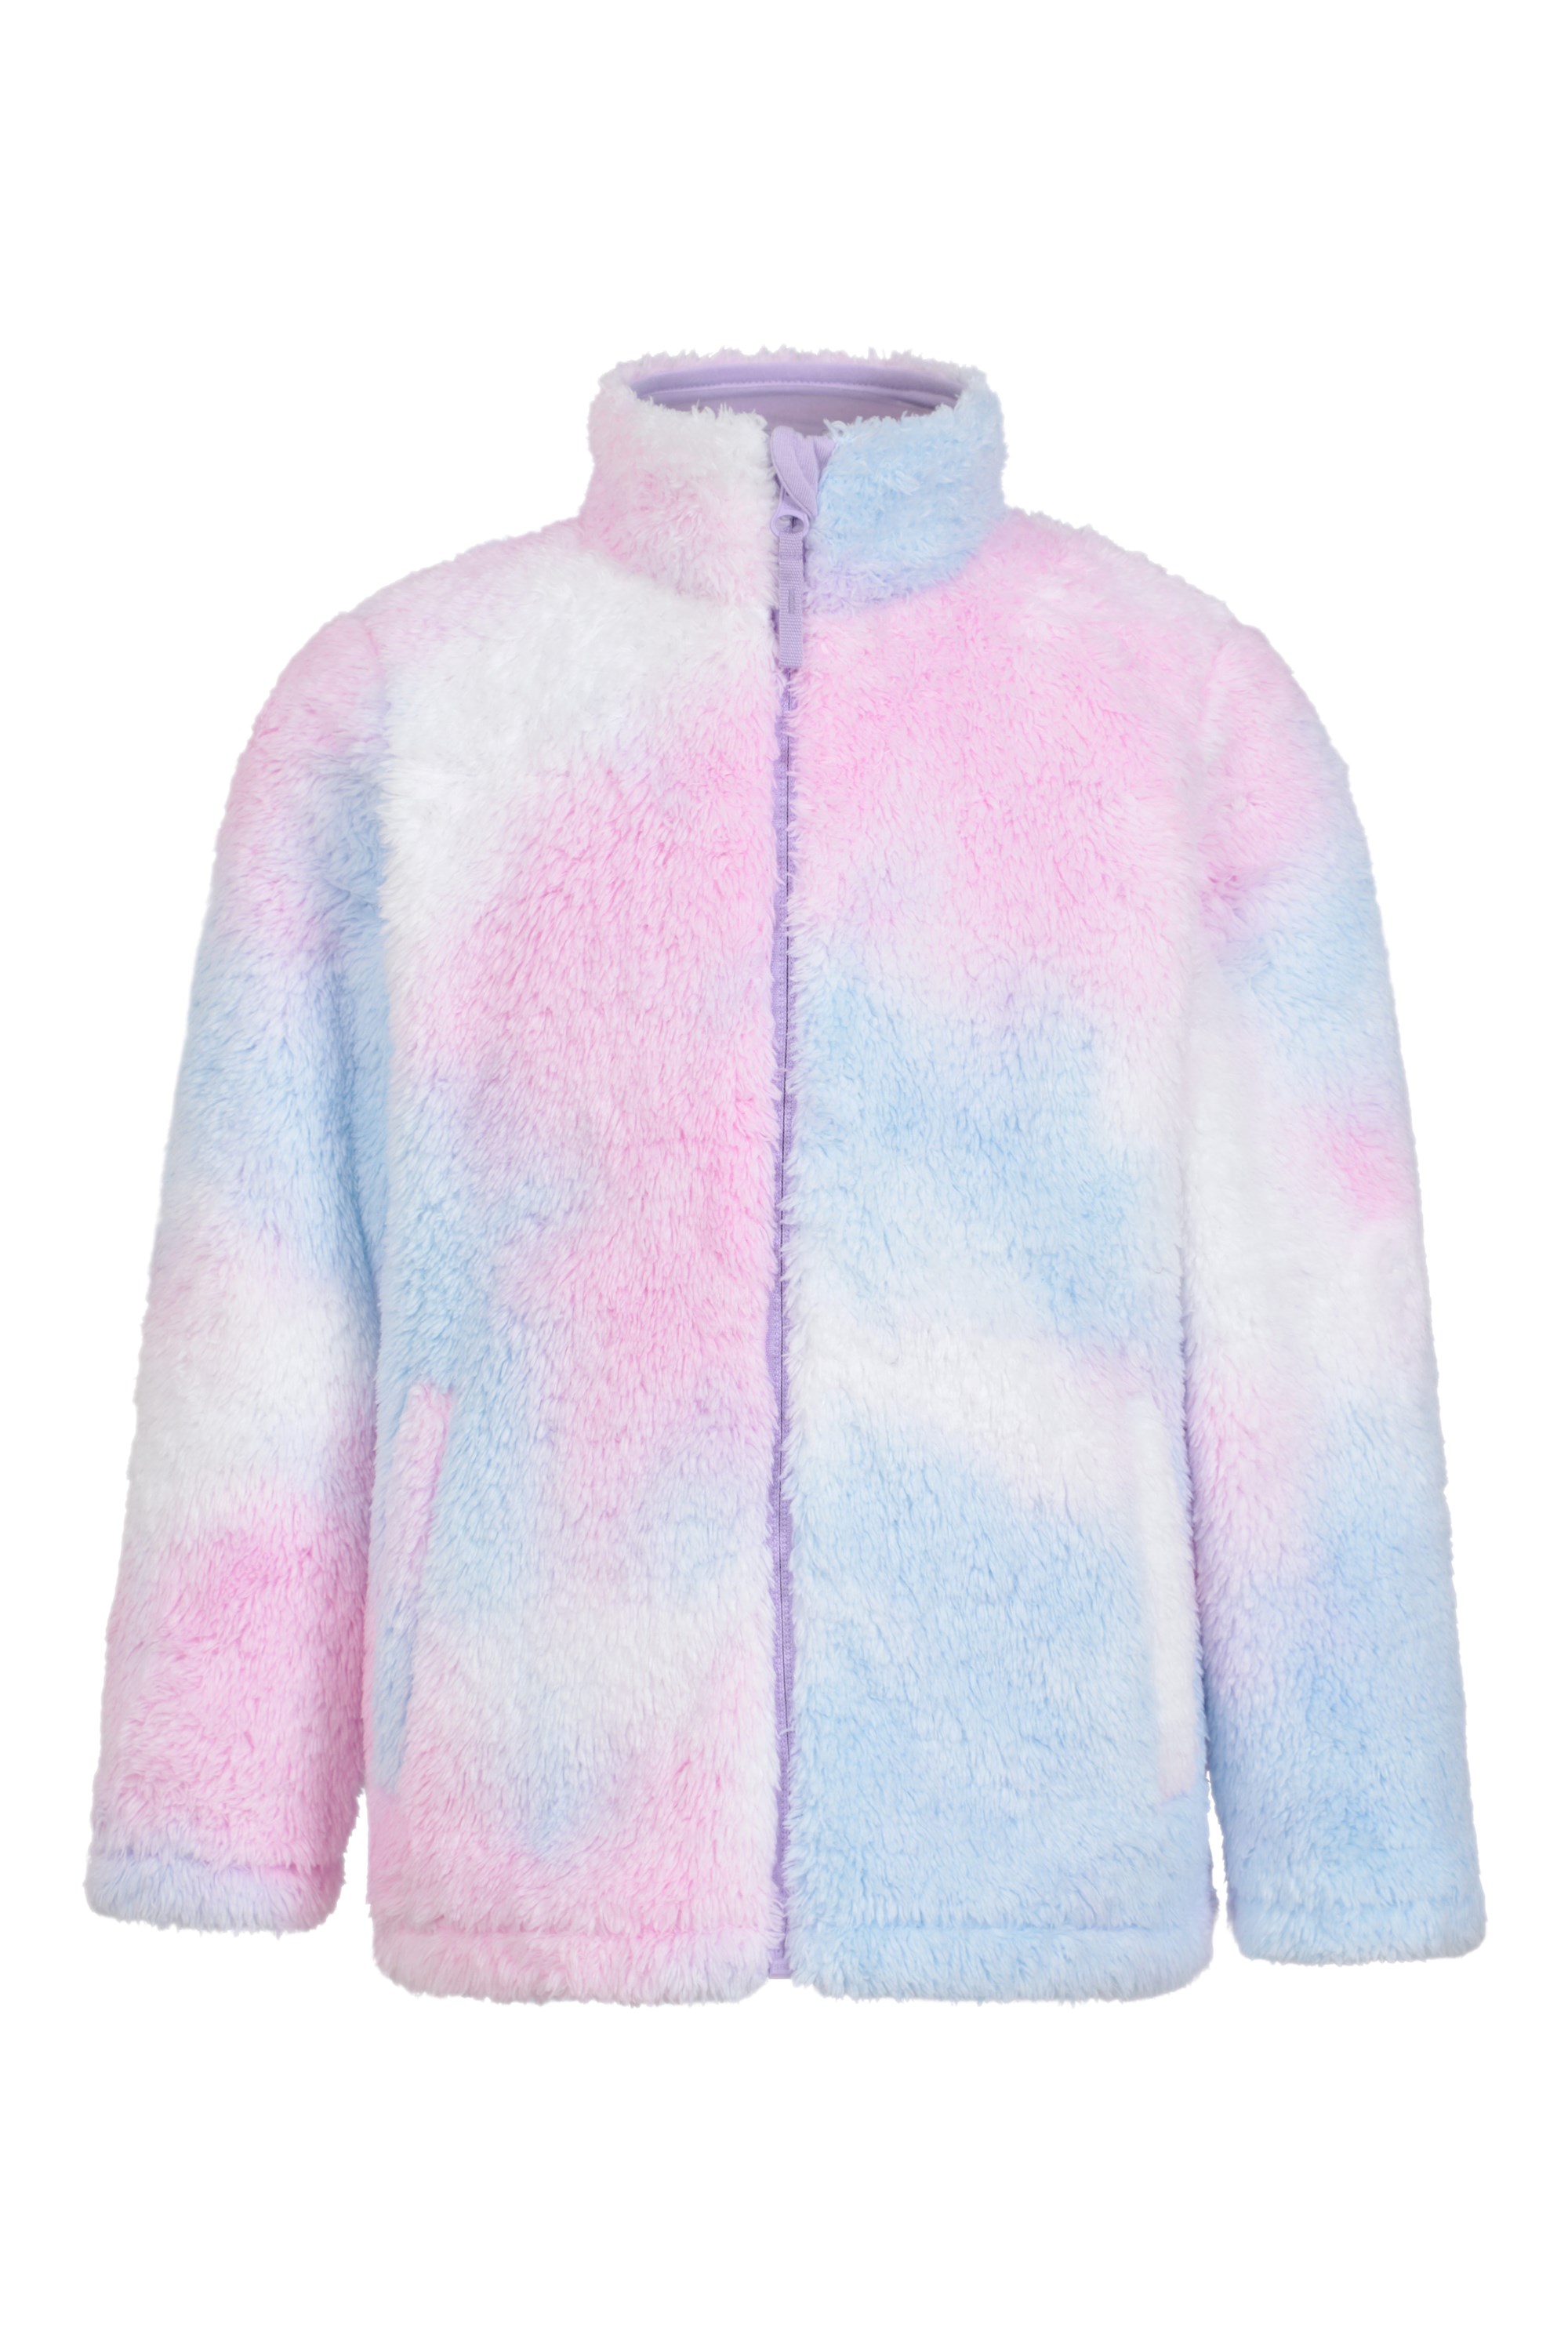 Rainbow Cozy Kids Fleece | Mountain Warehouse CA